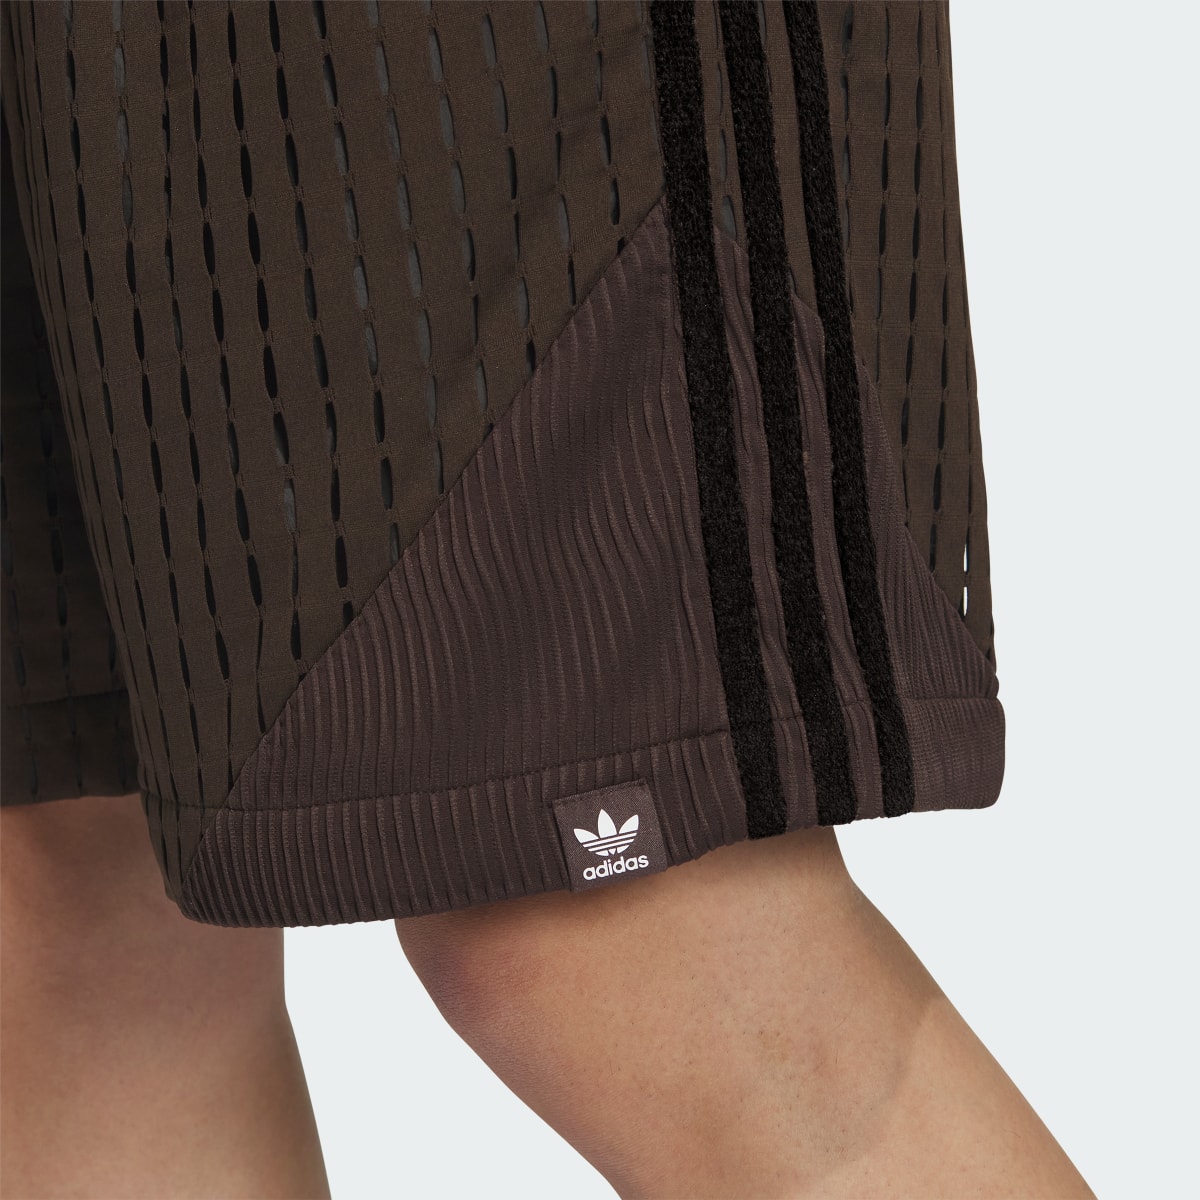 Adidas SFTM Shorts (Gender Neutral). 5